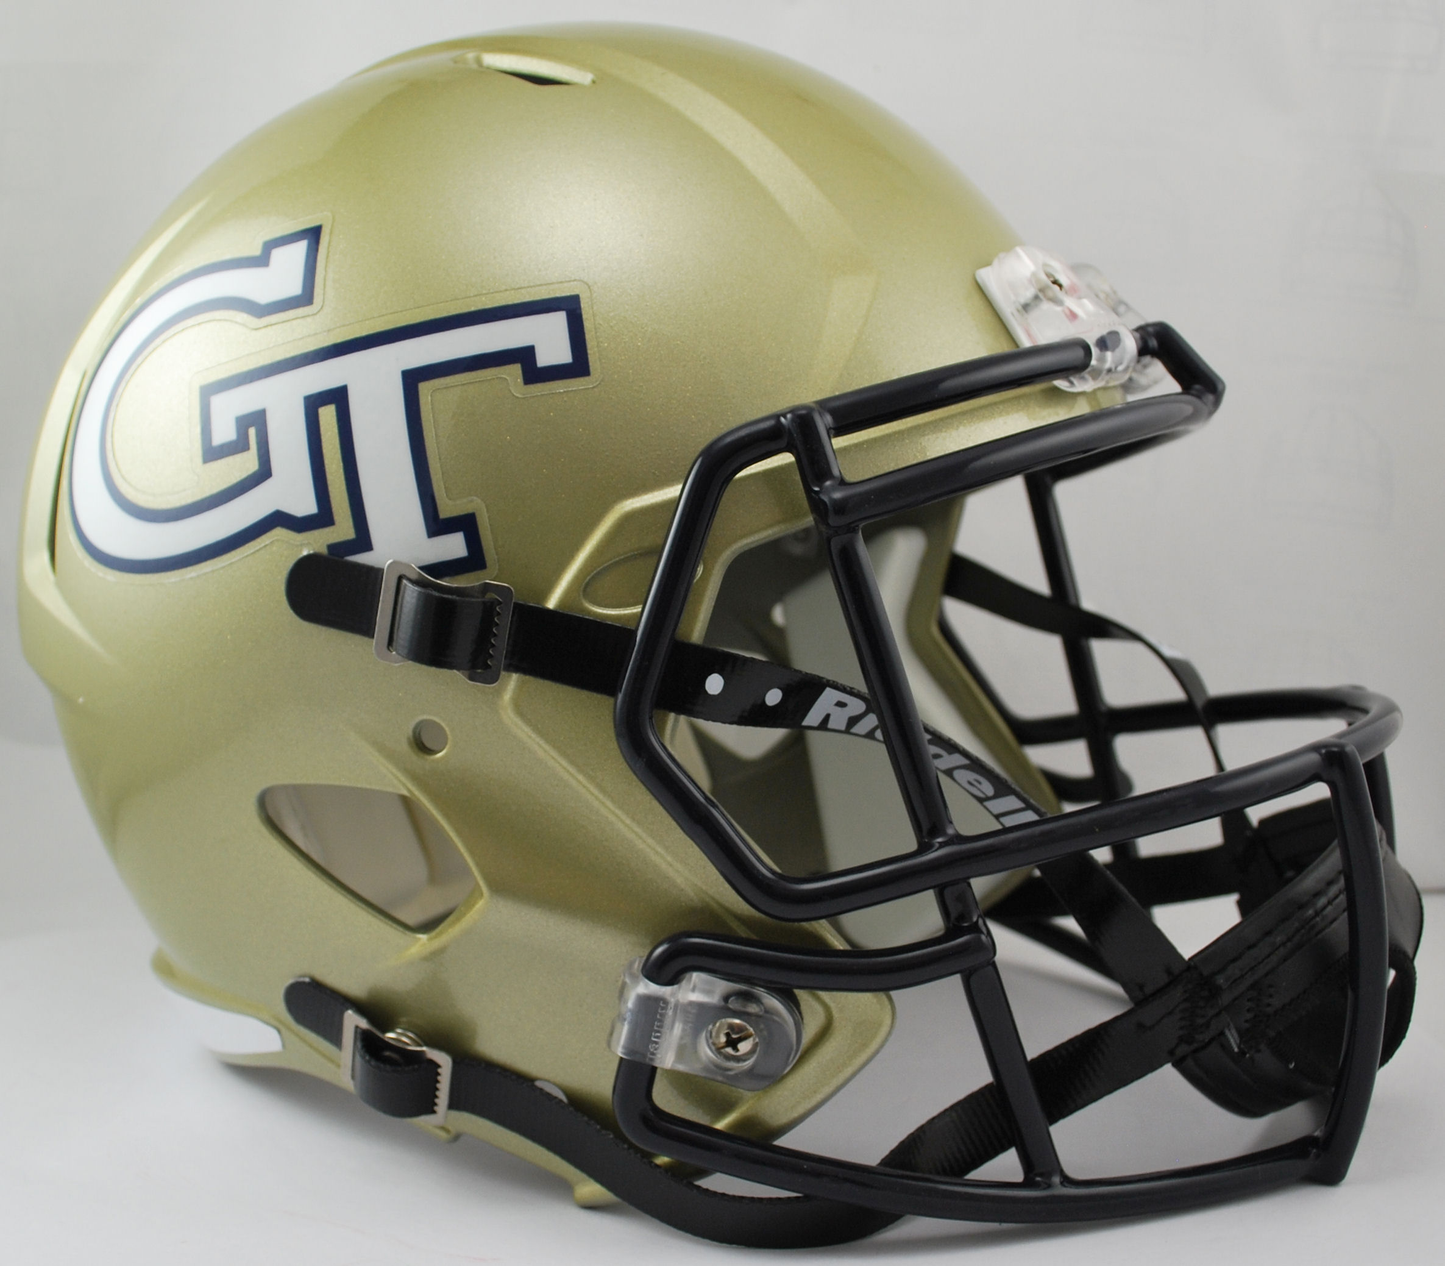 Georgia Tech Yellow Jackets full size replica helmet